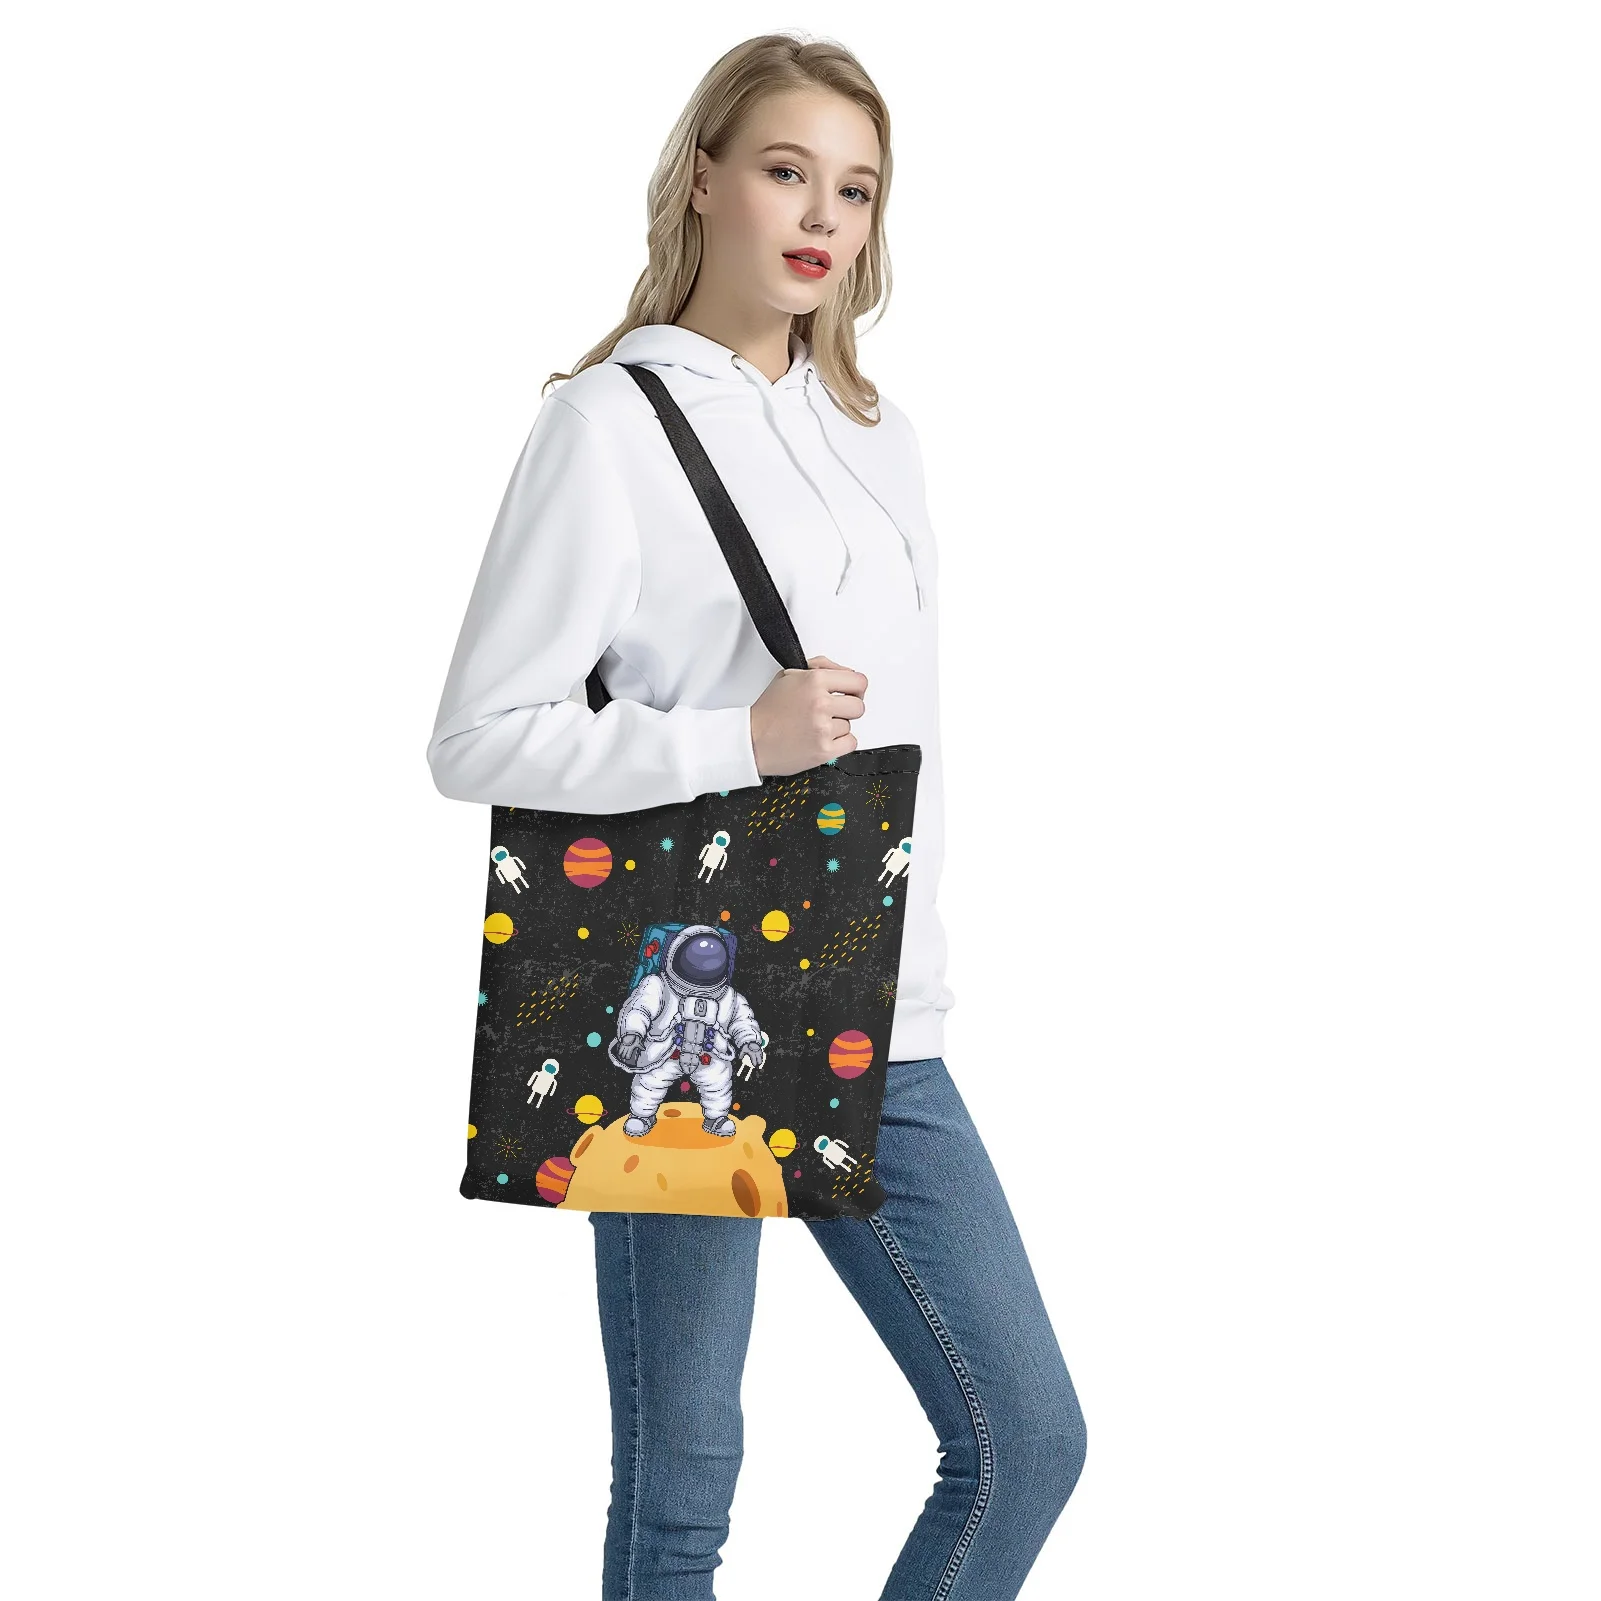 

Ladies Handbag Universe Astronaut Pattern Canvas Tote Bag Shopping Travel Women Eco Reusable Shoulder Shopper Bag Large Capacity